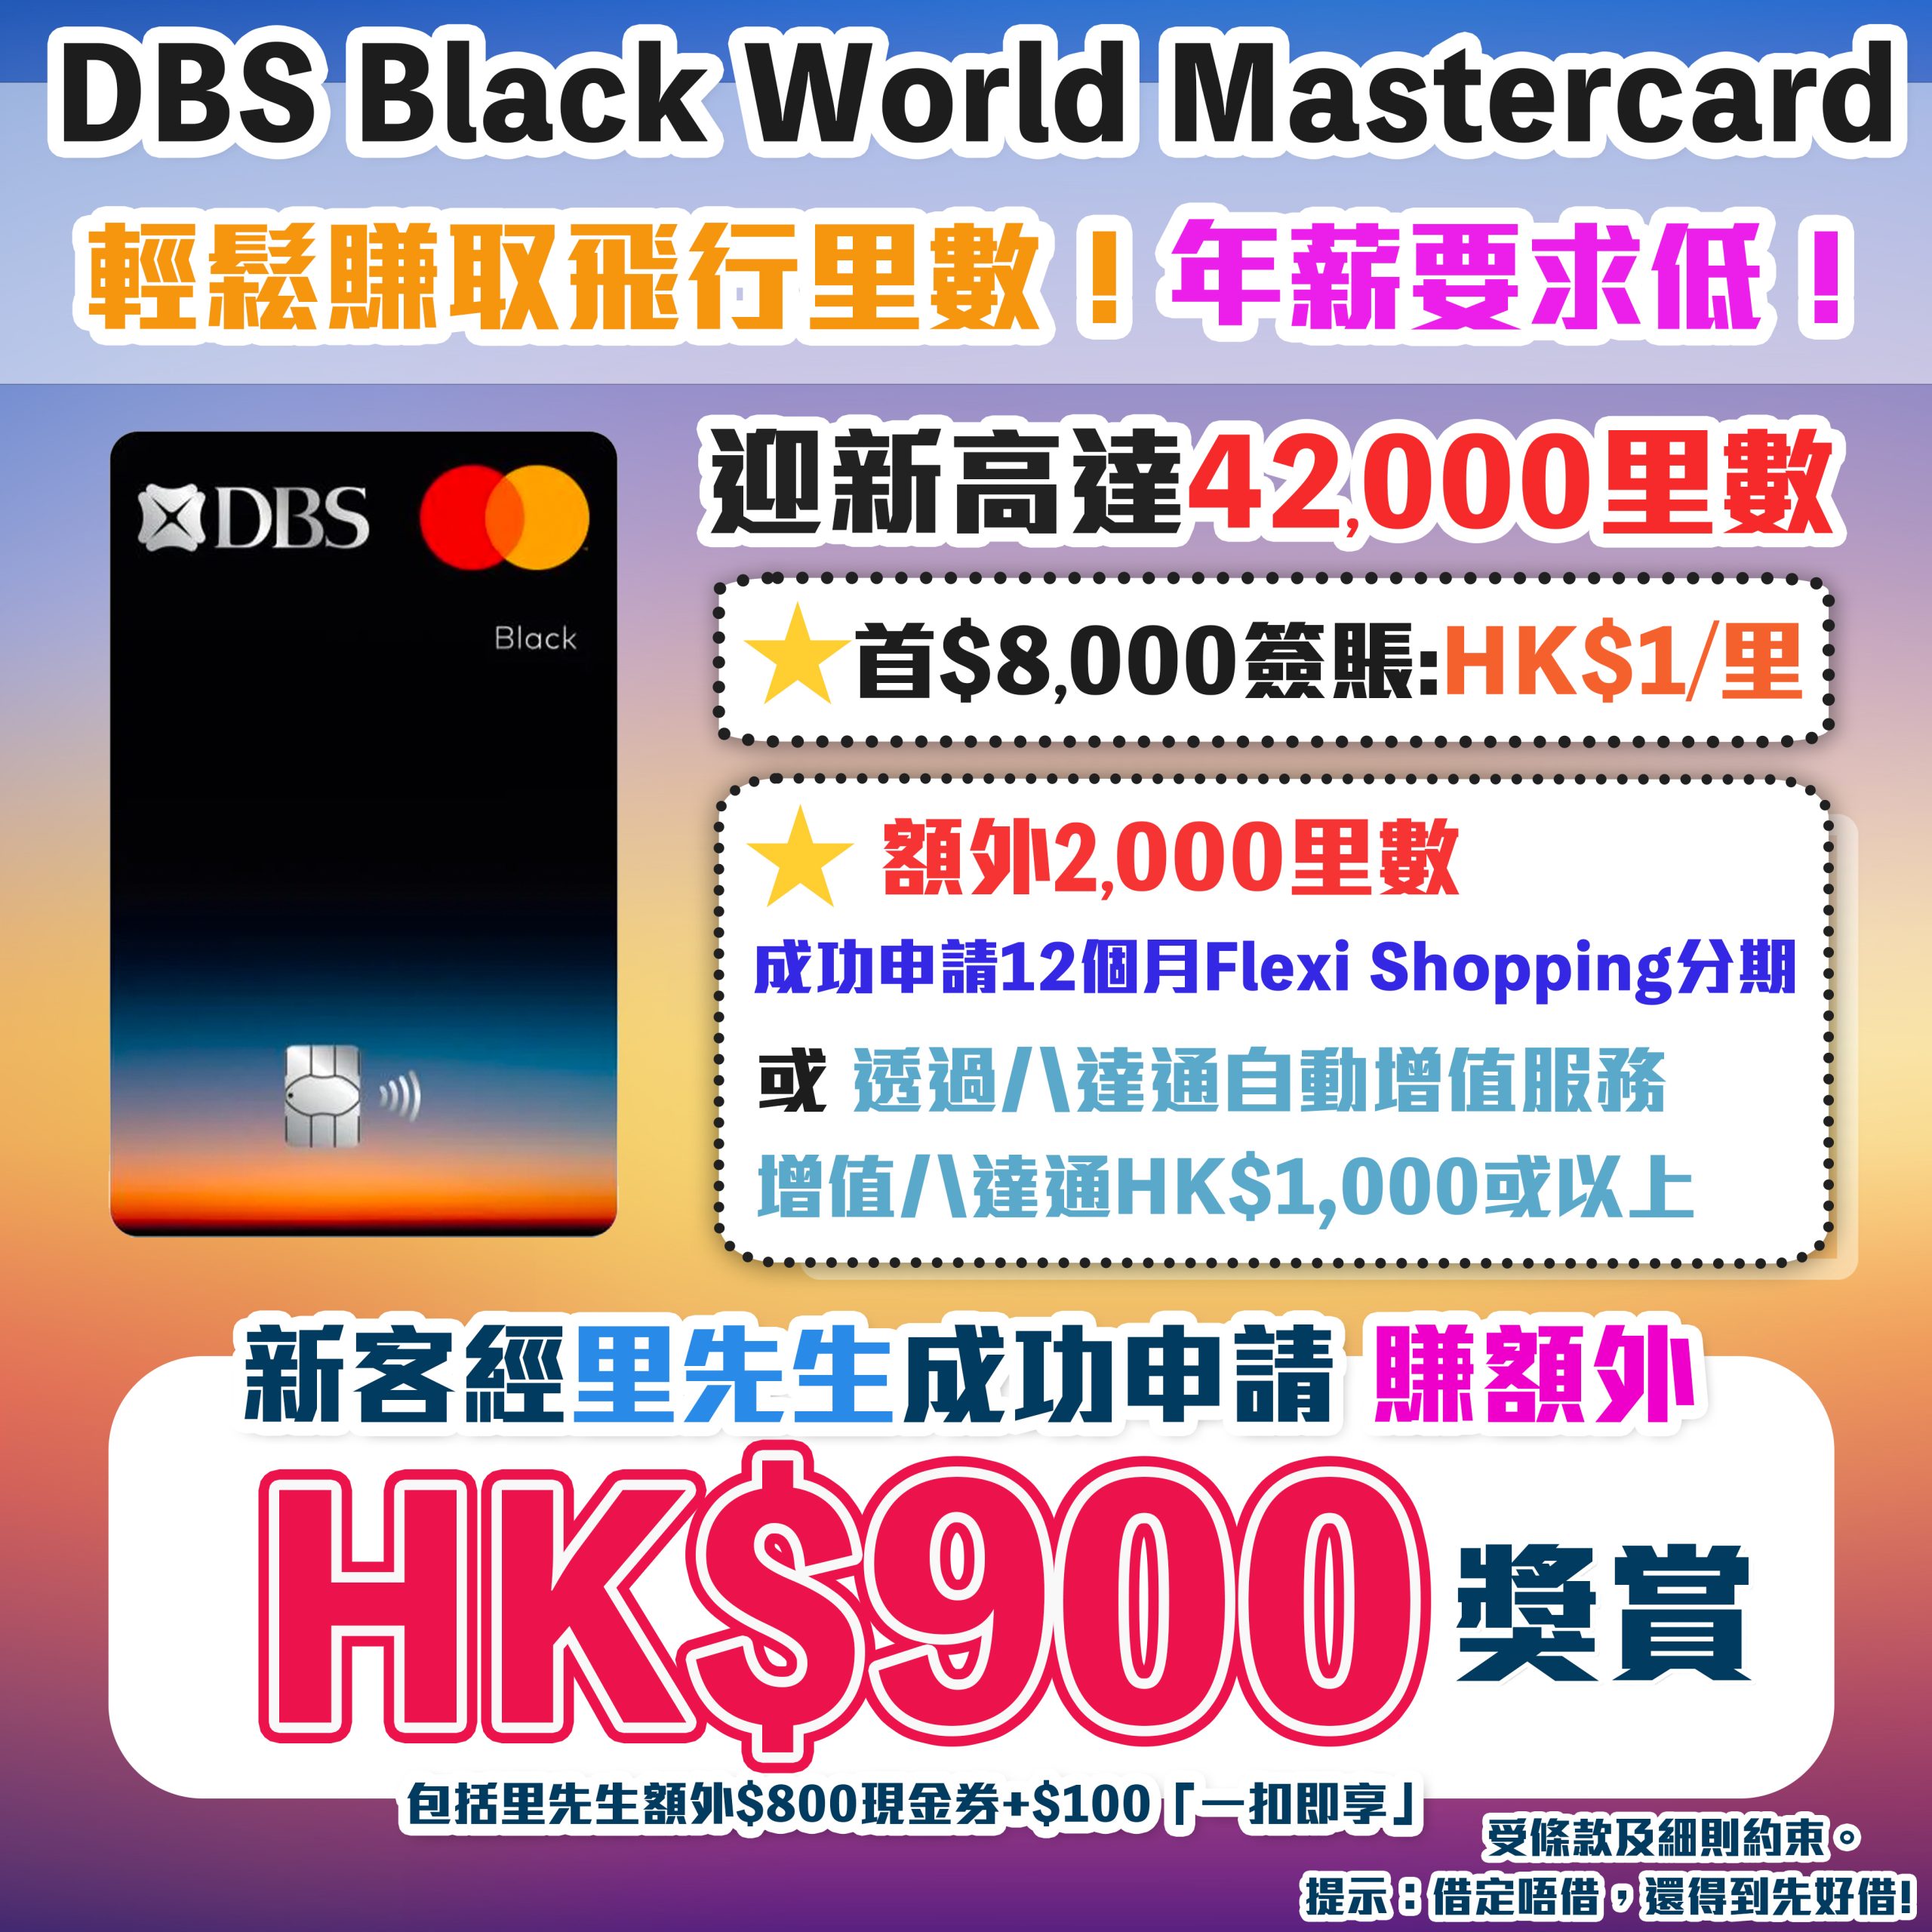 【DBS Black World Mastercard】額外$800 Apple禮品卡！迎新高達42,000里數 儲Asia Miles/Avios必備 免年費及年薪要求低